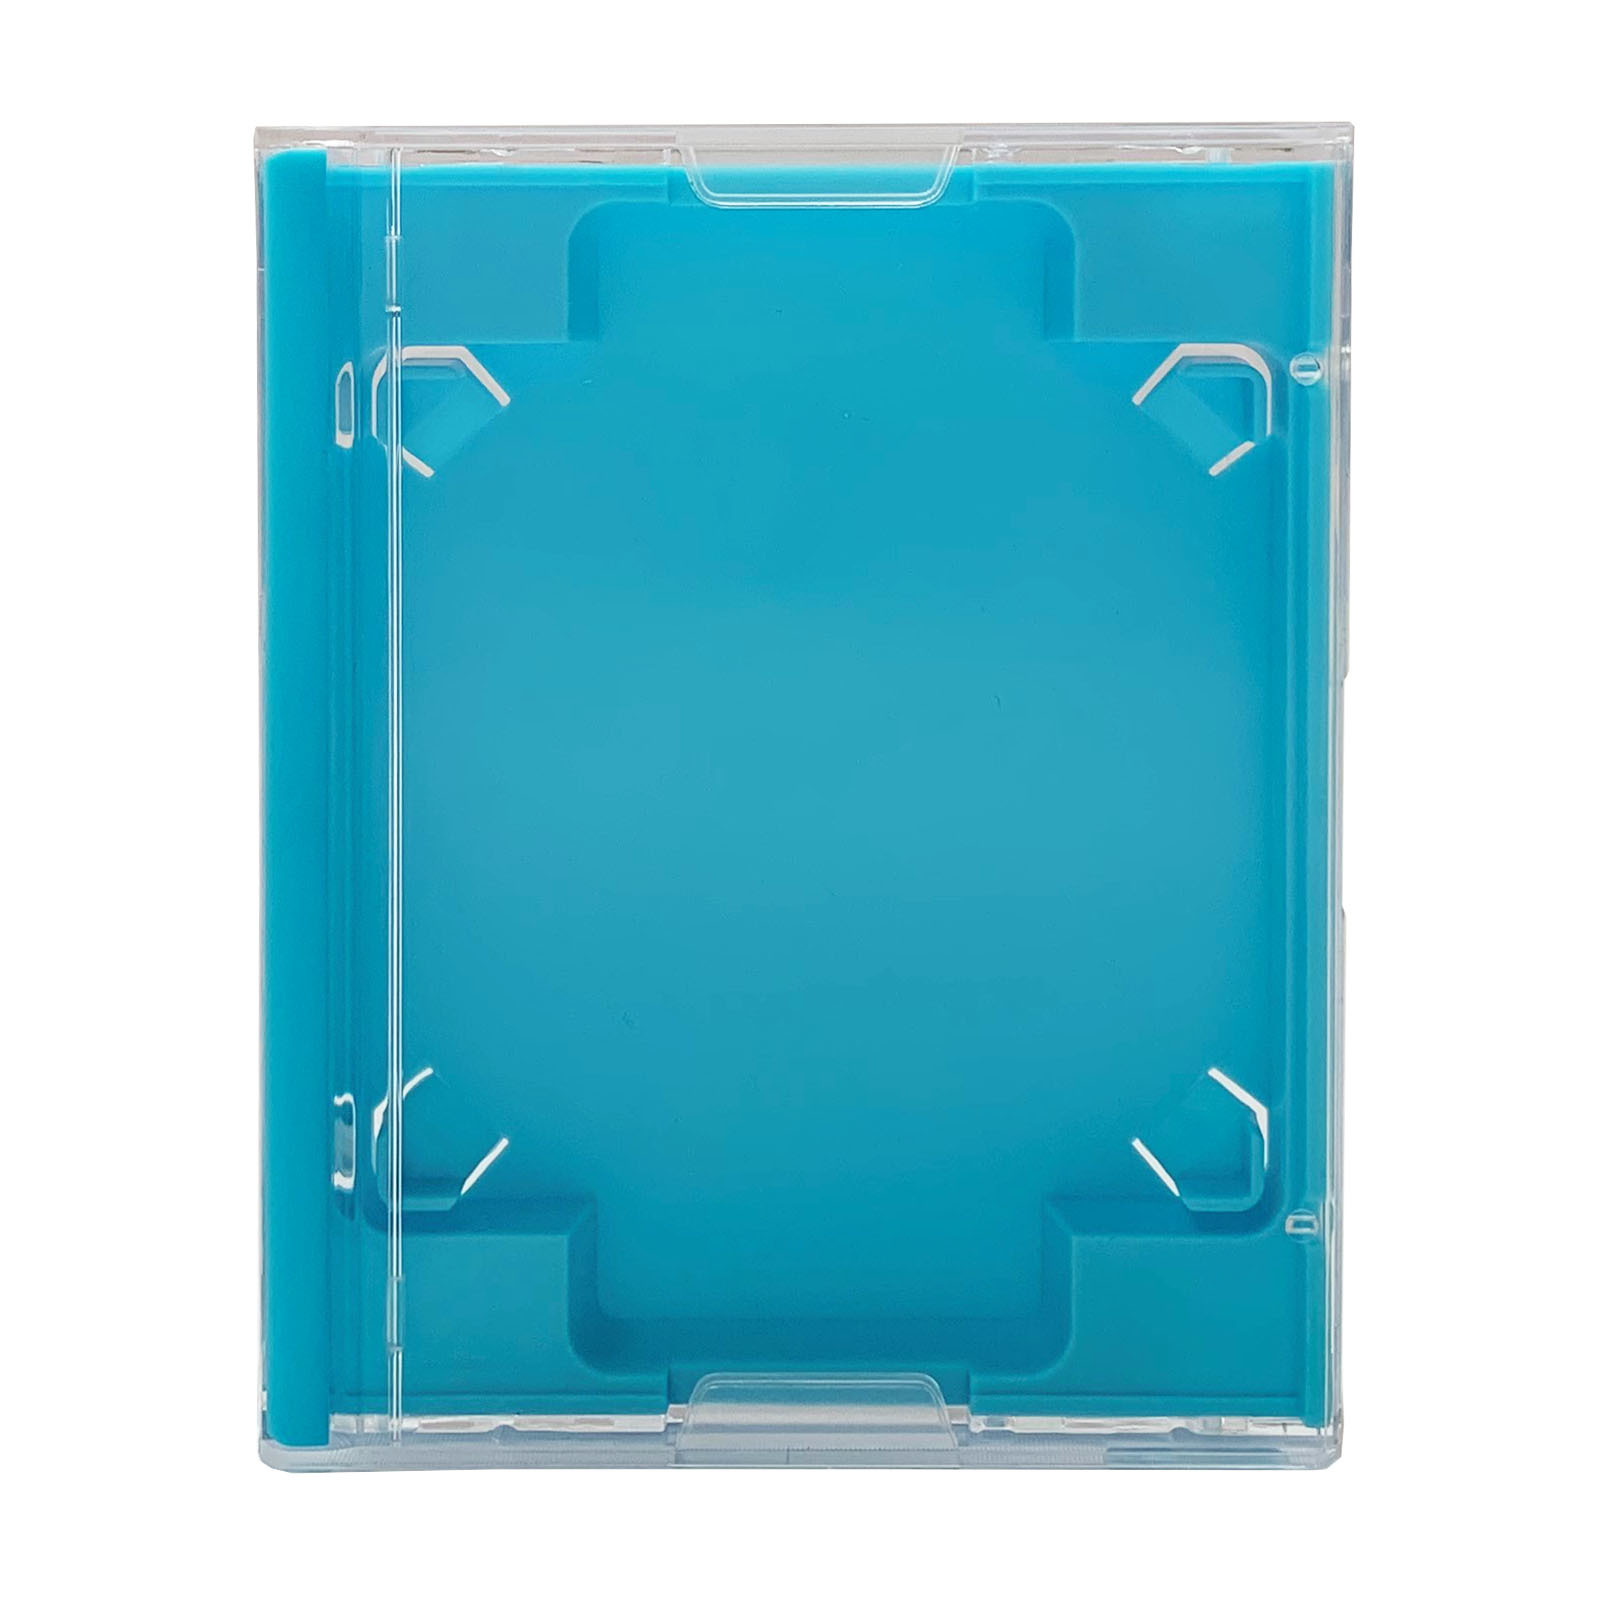 Full size MiniDisc case with a light blue inner tray - Retro Style Media